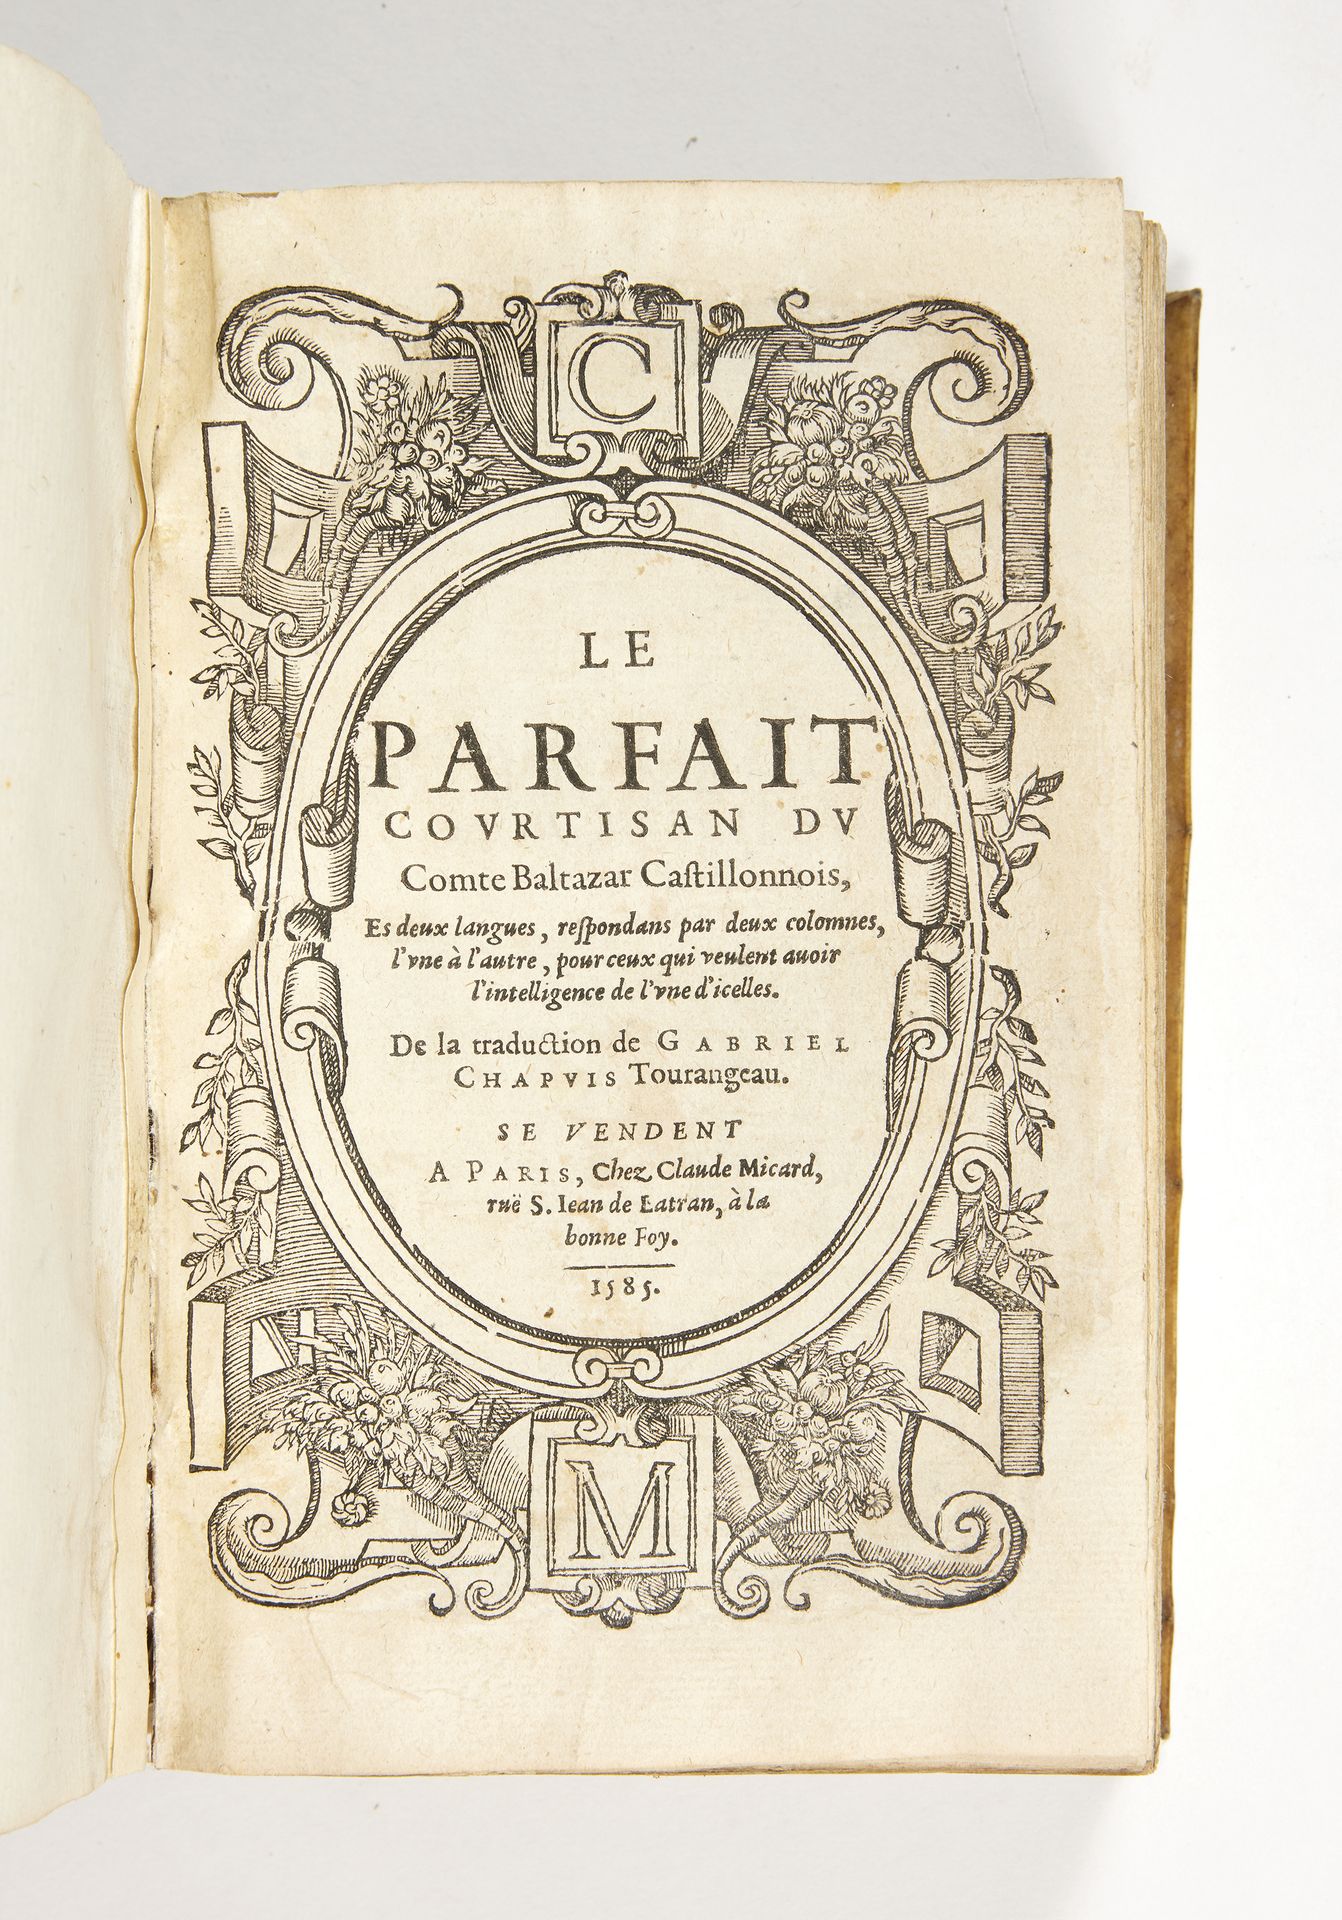 CASTIGLIONE, comte Baldassare Le Parfait Courtisan.
Translation by Gabriel Chapu&hellip;